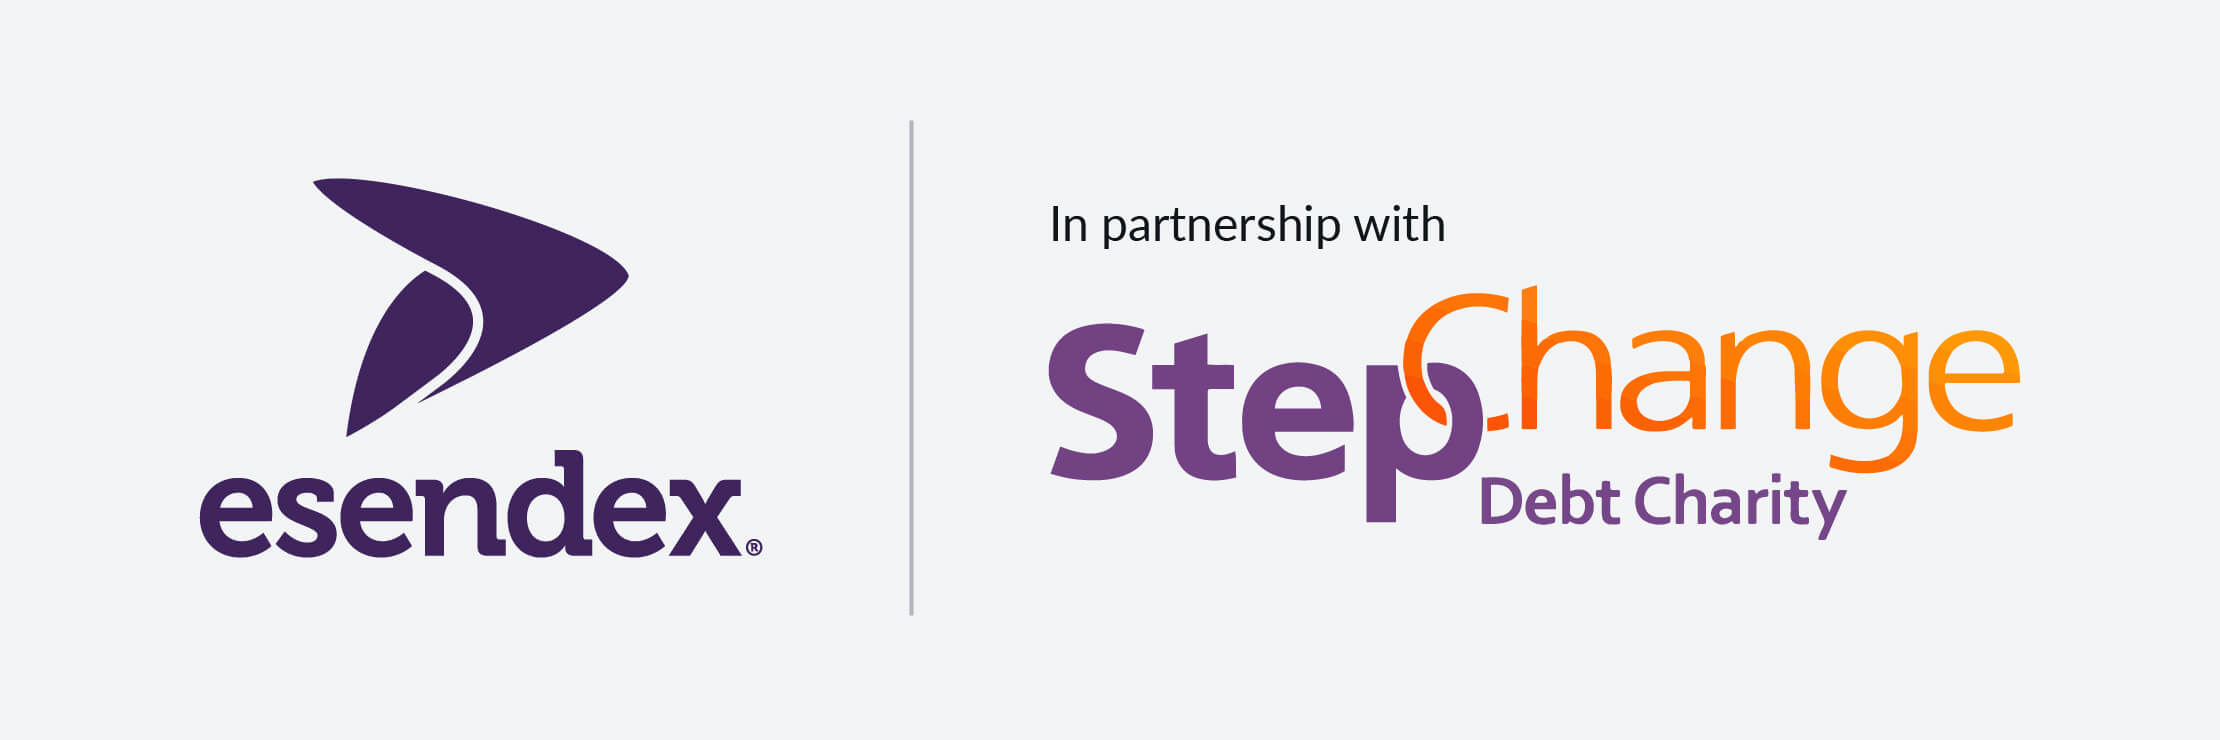 Esendex partners with StepChange